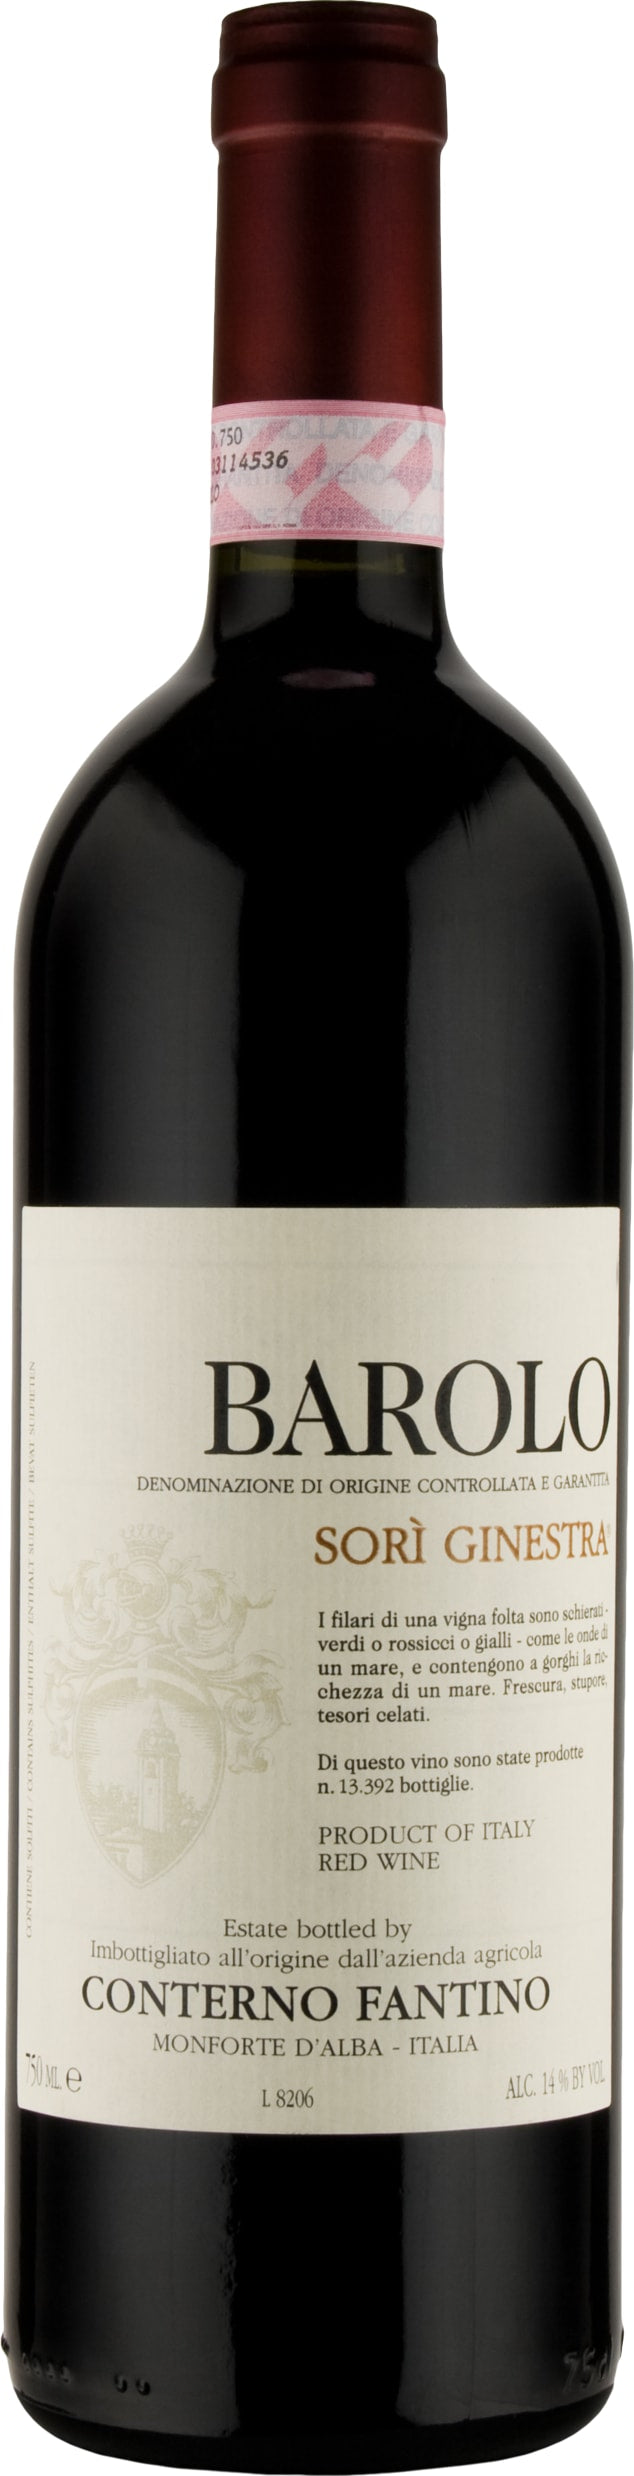 Conterno Fantino Barolo Sori Ginestra 2019 75cl - Buy Conterno Fantino Wines from GREAT WINES DIRECT wine shop